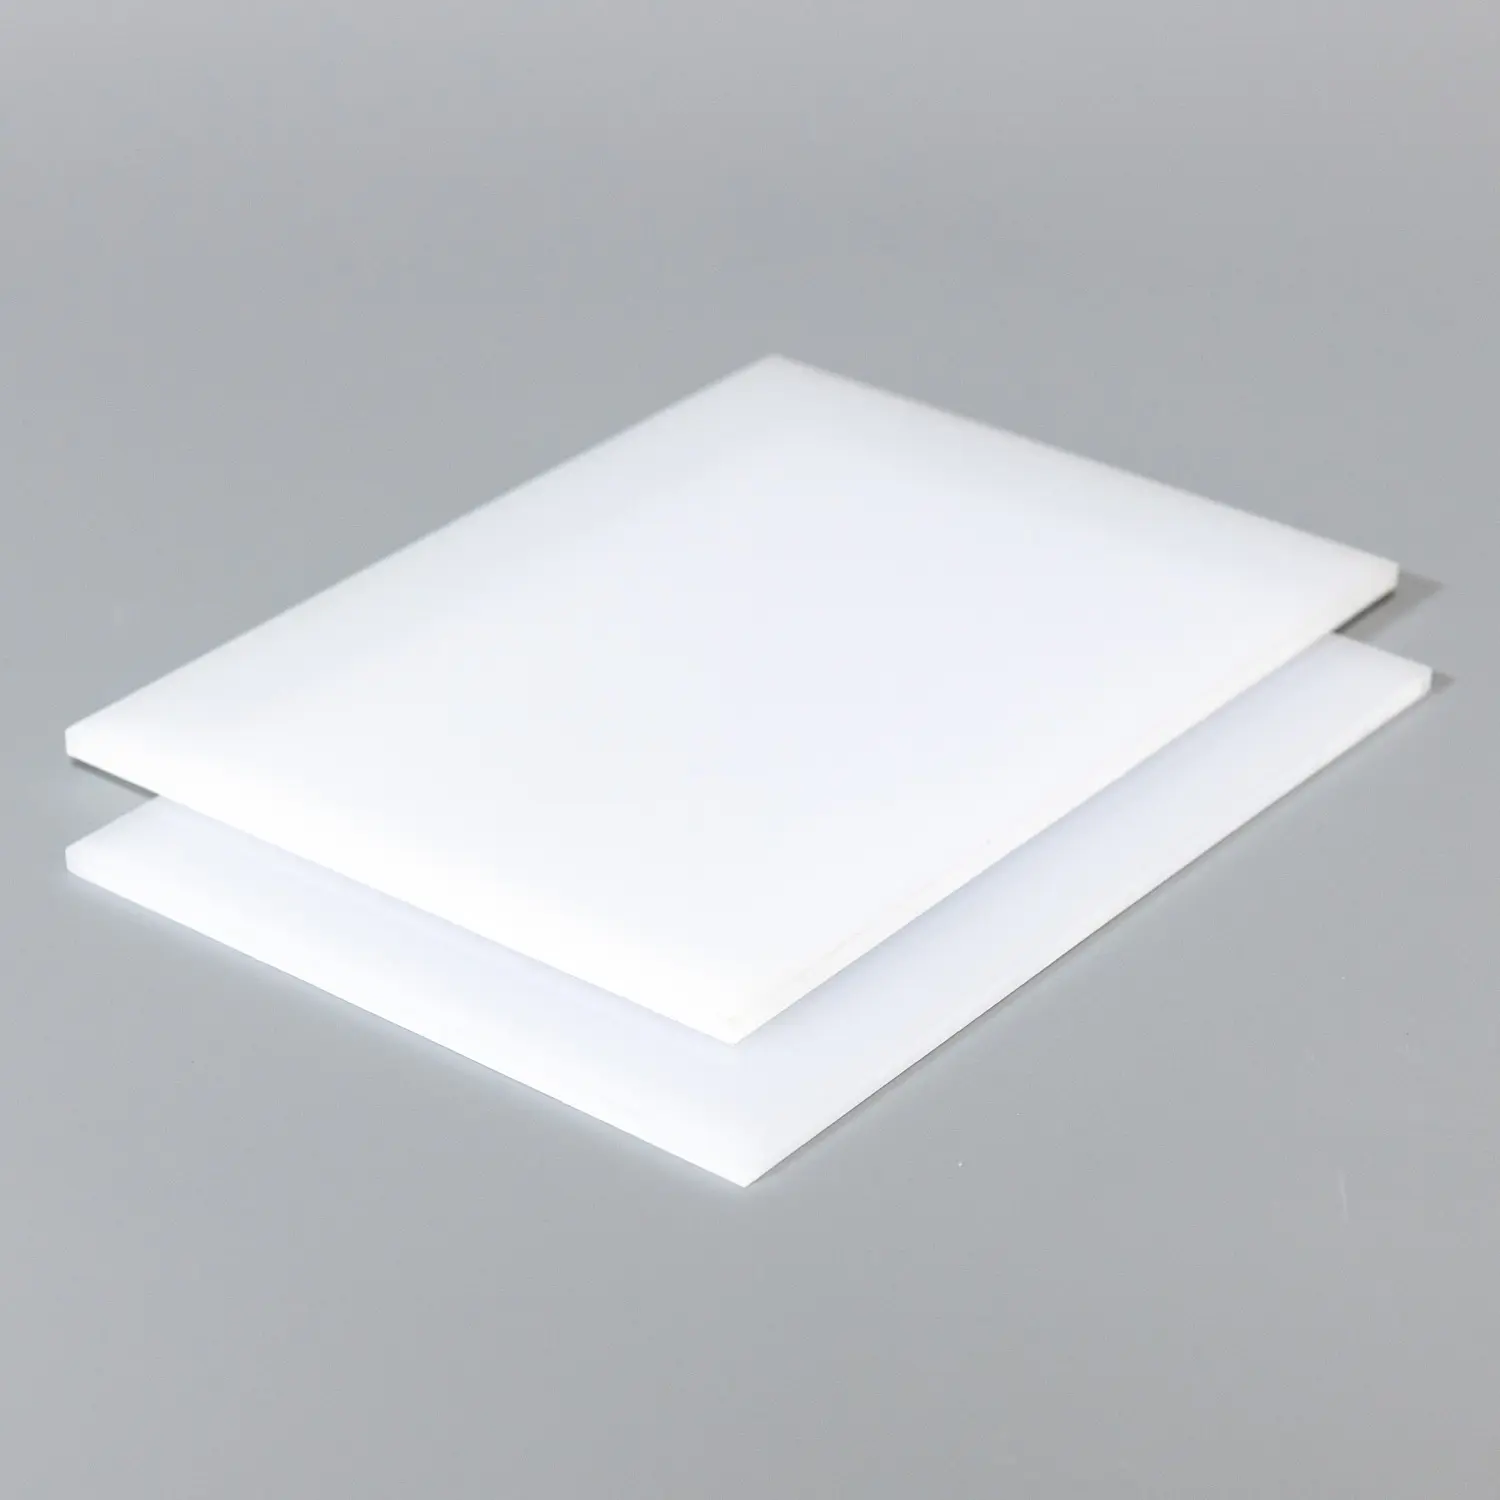 Individuelle milchige Farbe weiß dünn dickes Polycarbonat-Bogen Kunststoffblech PC-Brett Brett